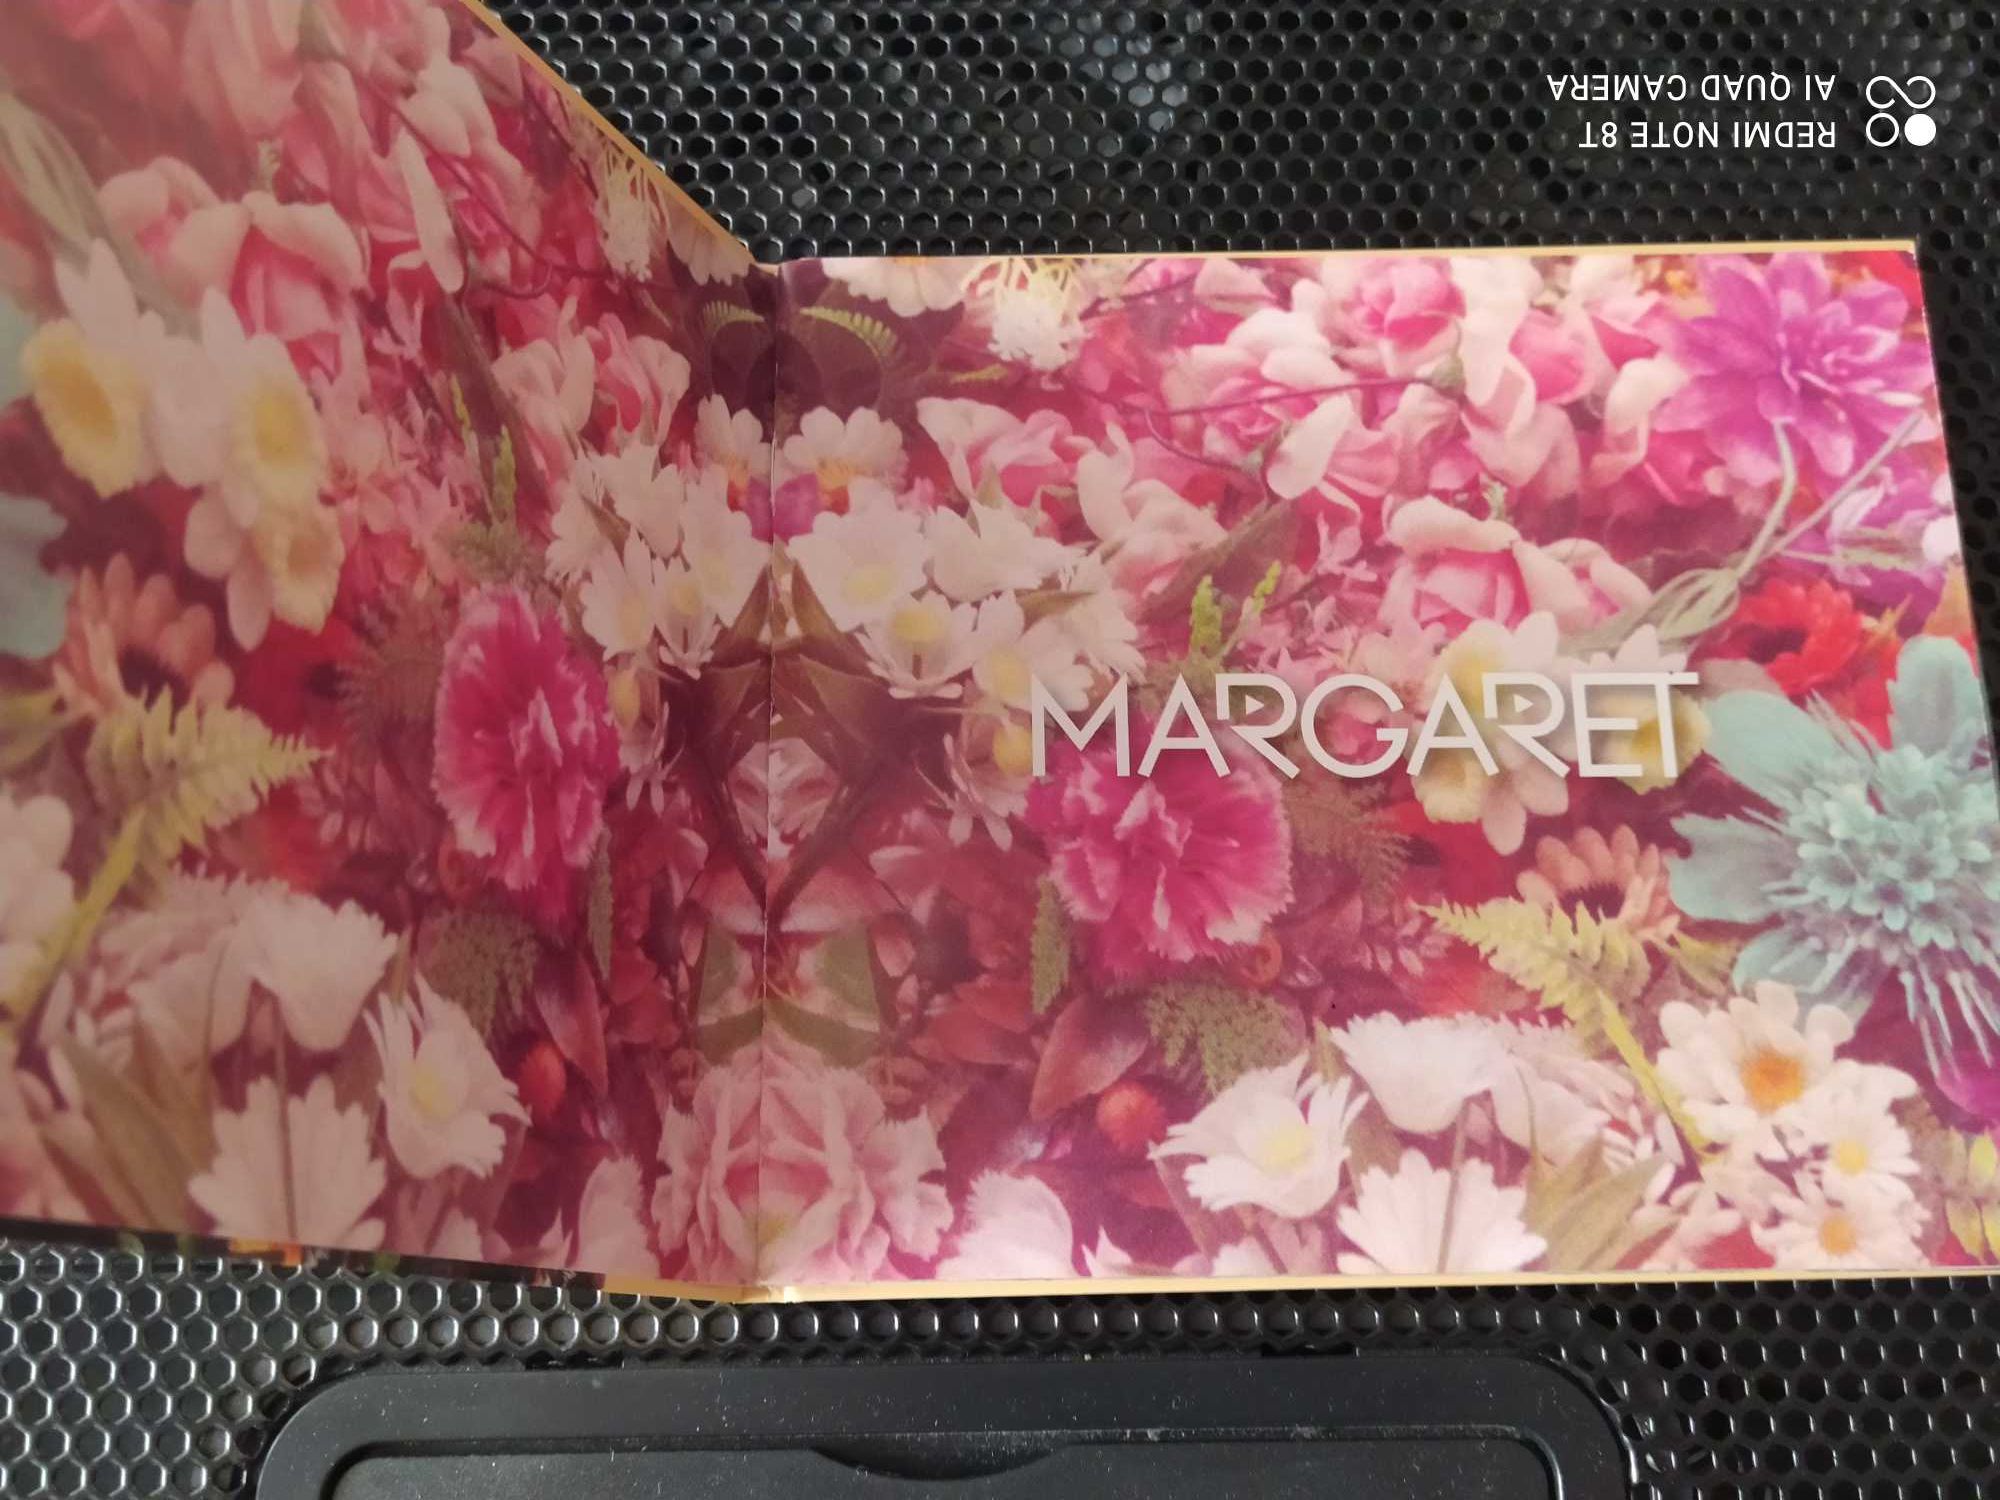 płyta CD Margaret "Add The Blonde" muzyka